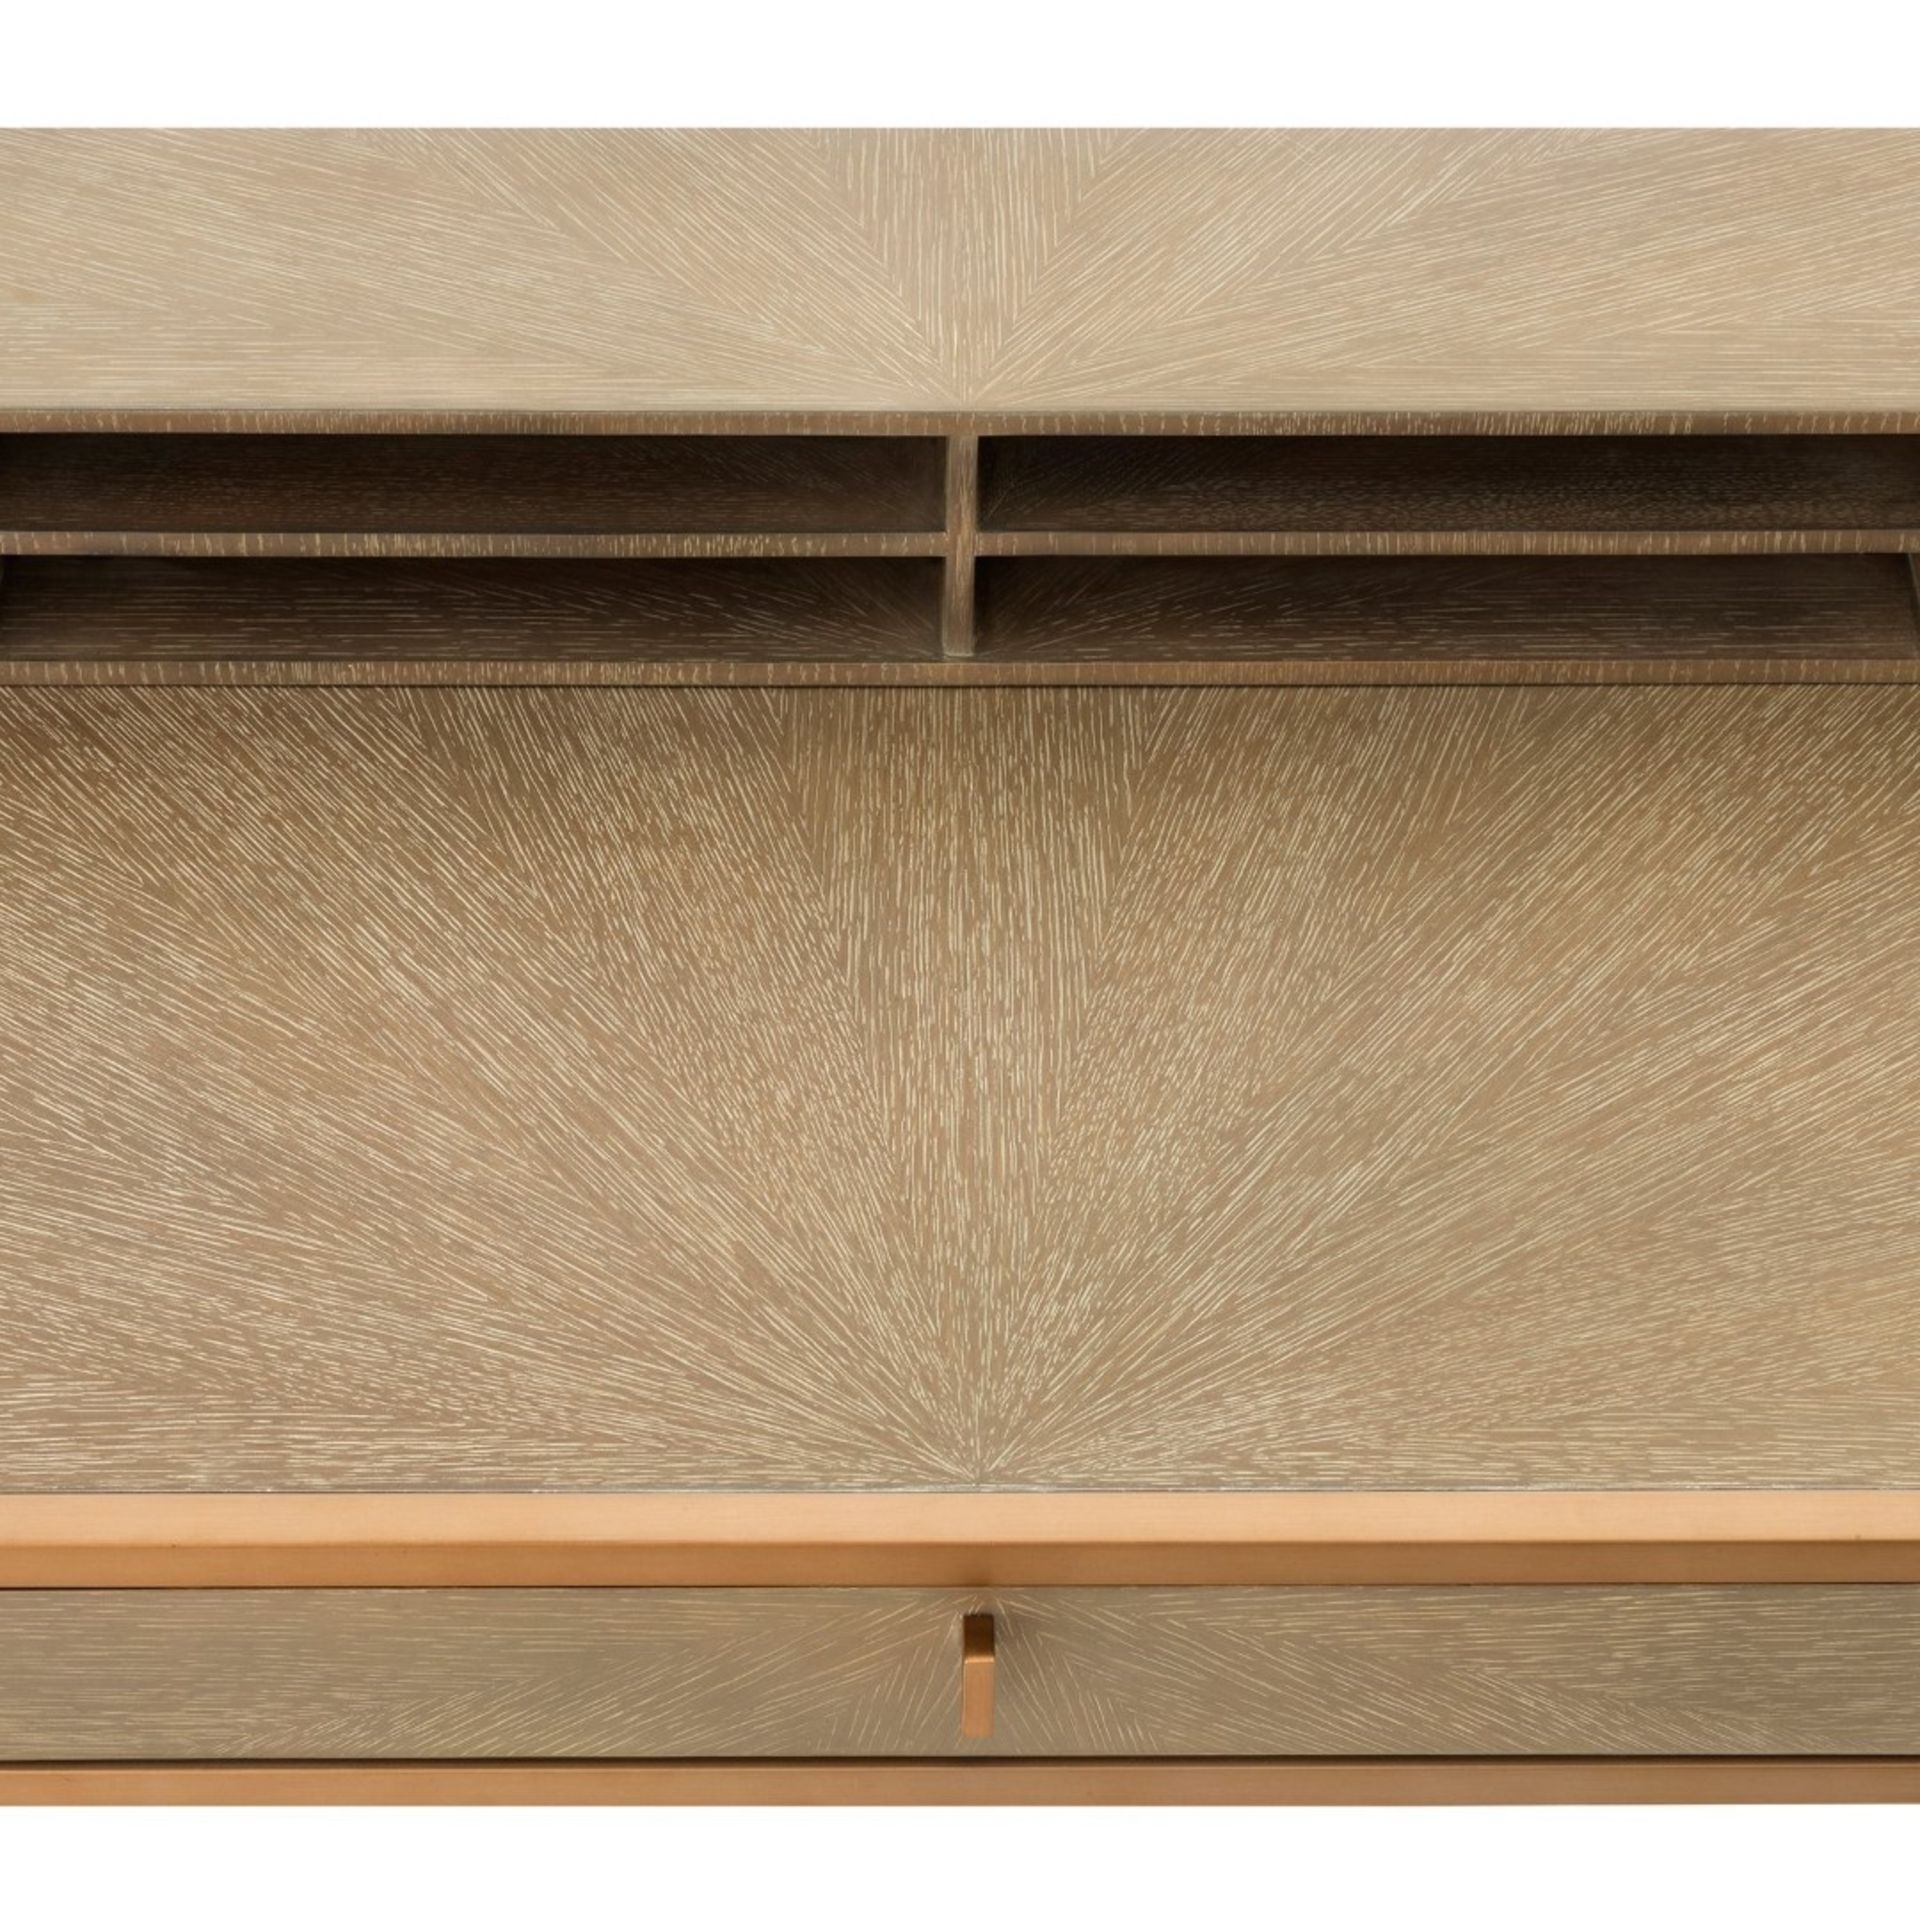 1 x EICHHOLTZ 'Highland' Designer Desk With Washed Oak And Brushed Brass Finishes - RRP £3,519 - Image 6 of 13